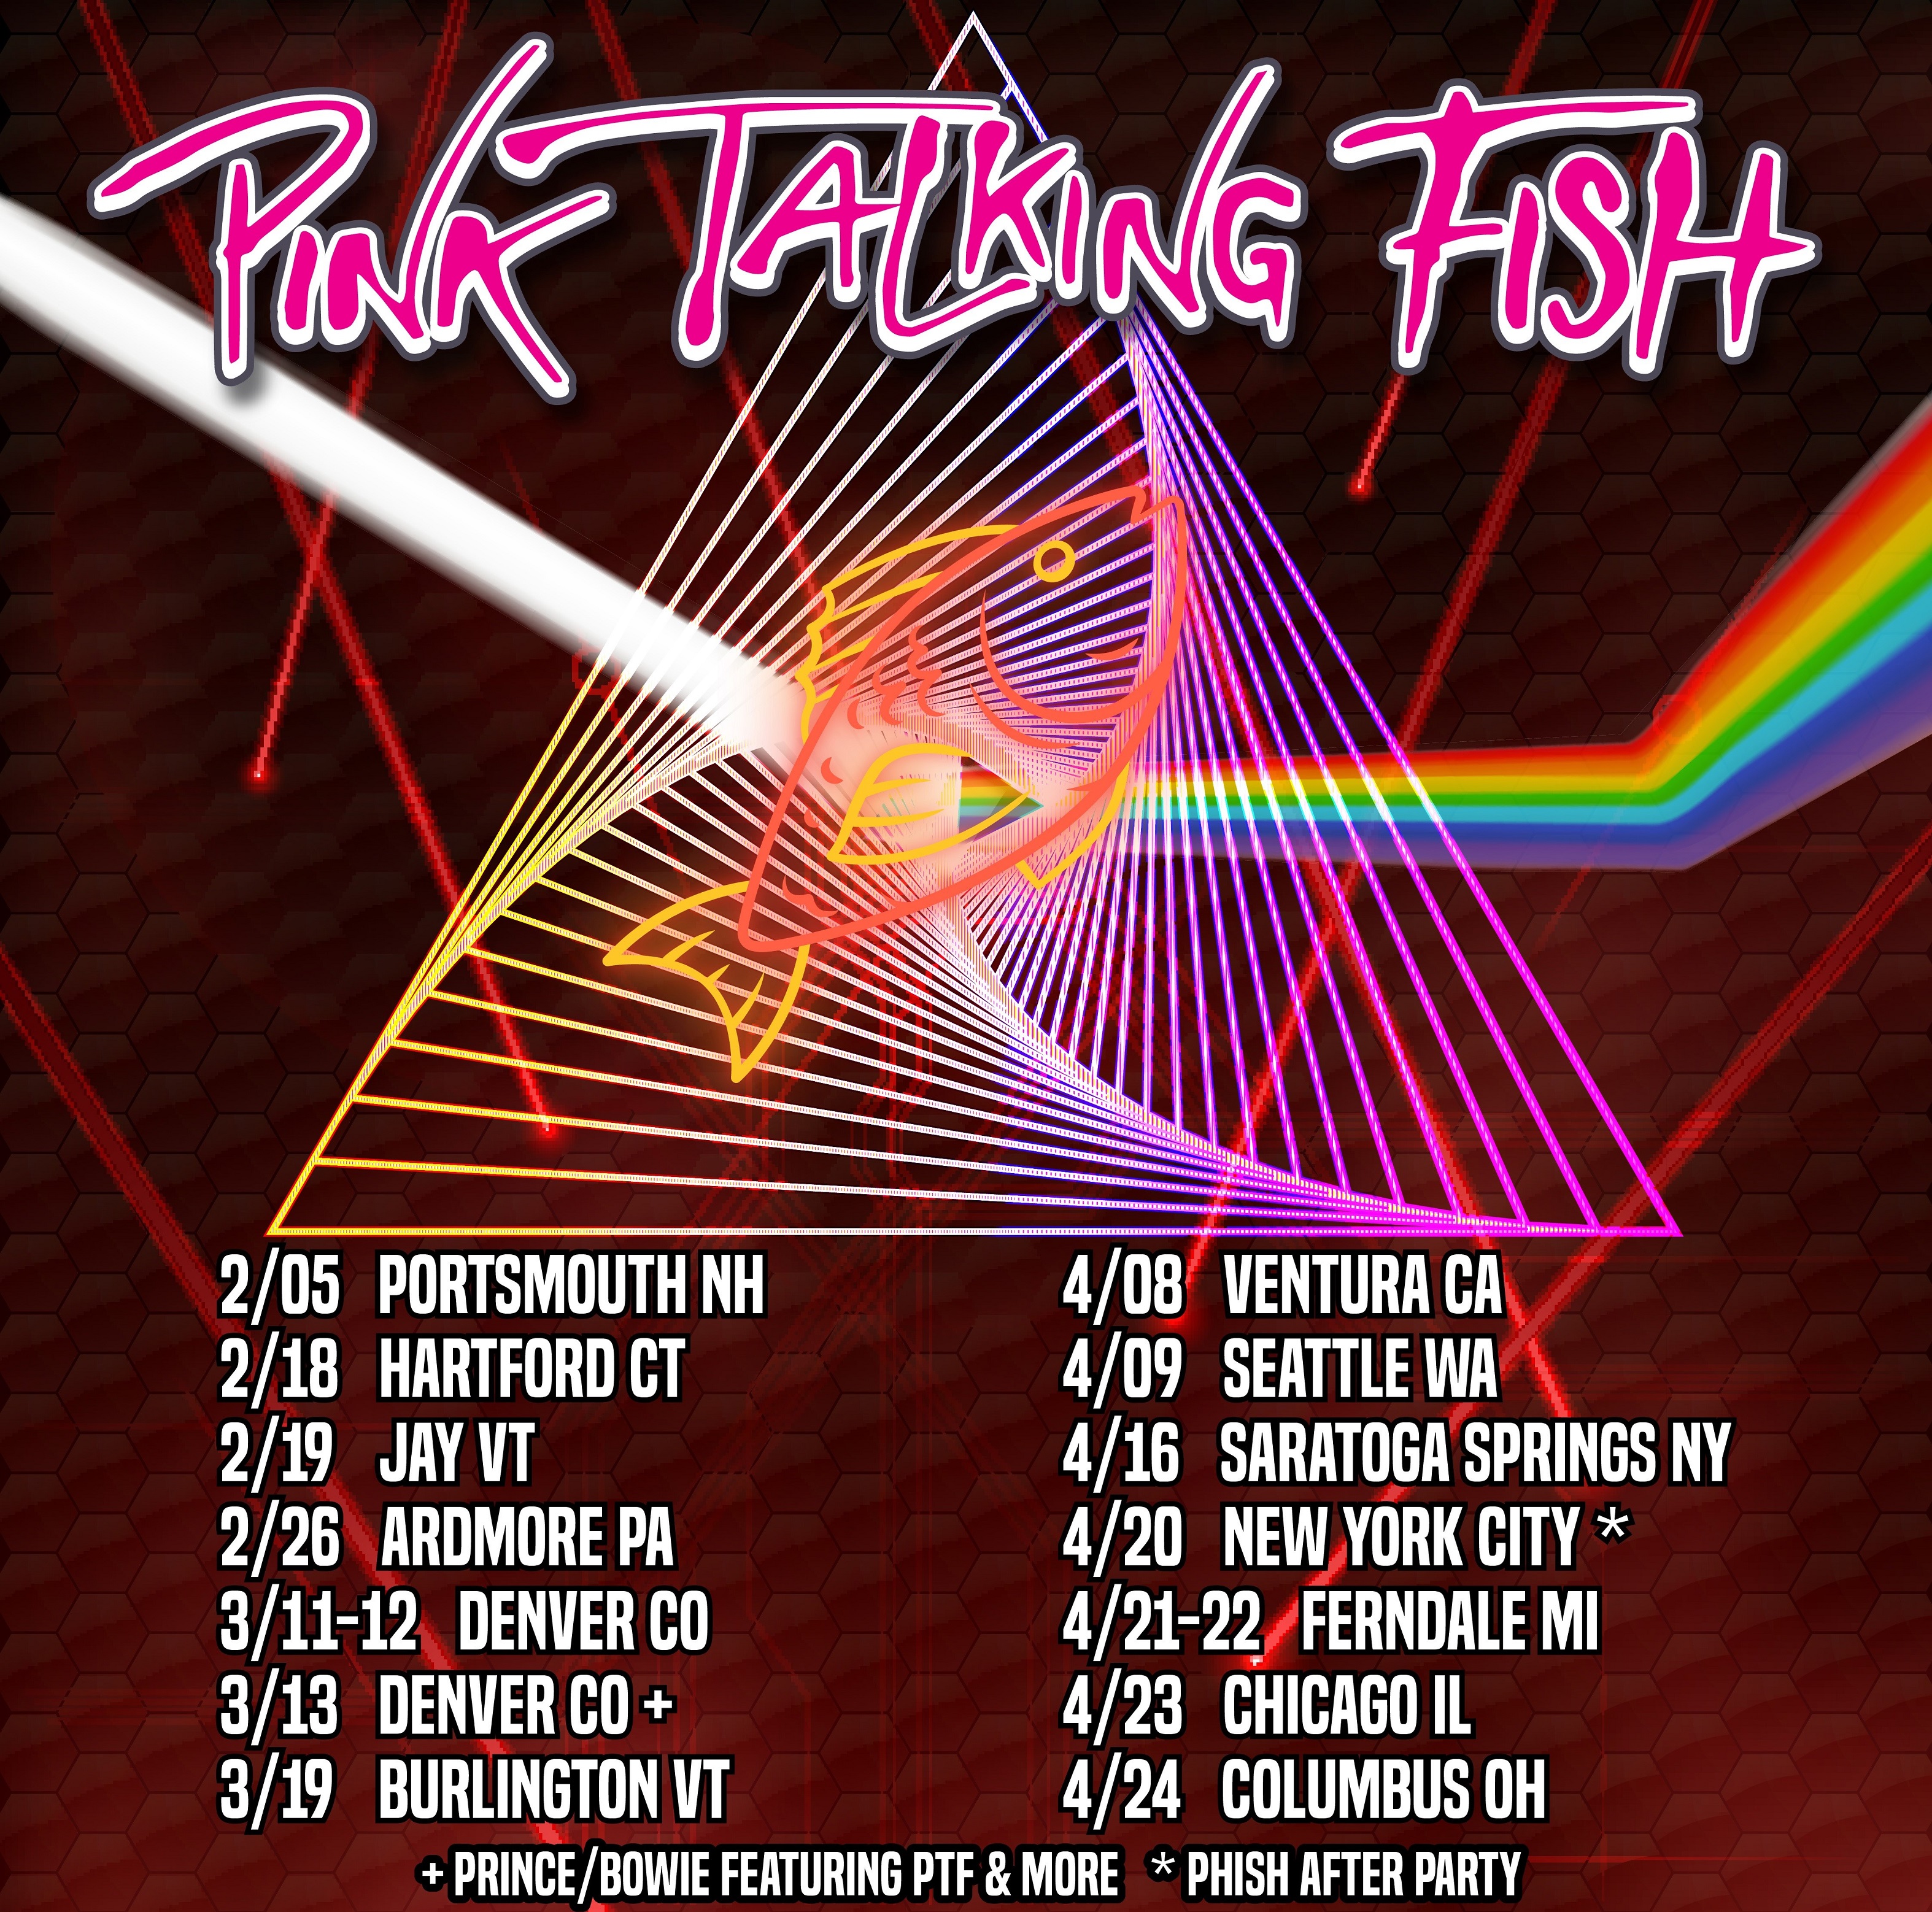 Pink Talking Fish tour kicks off Saturday night in Portsmouth, NH